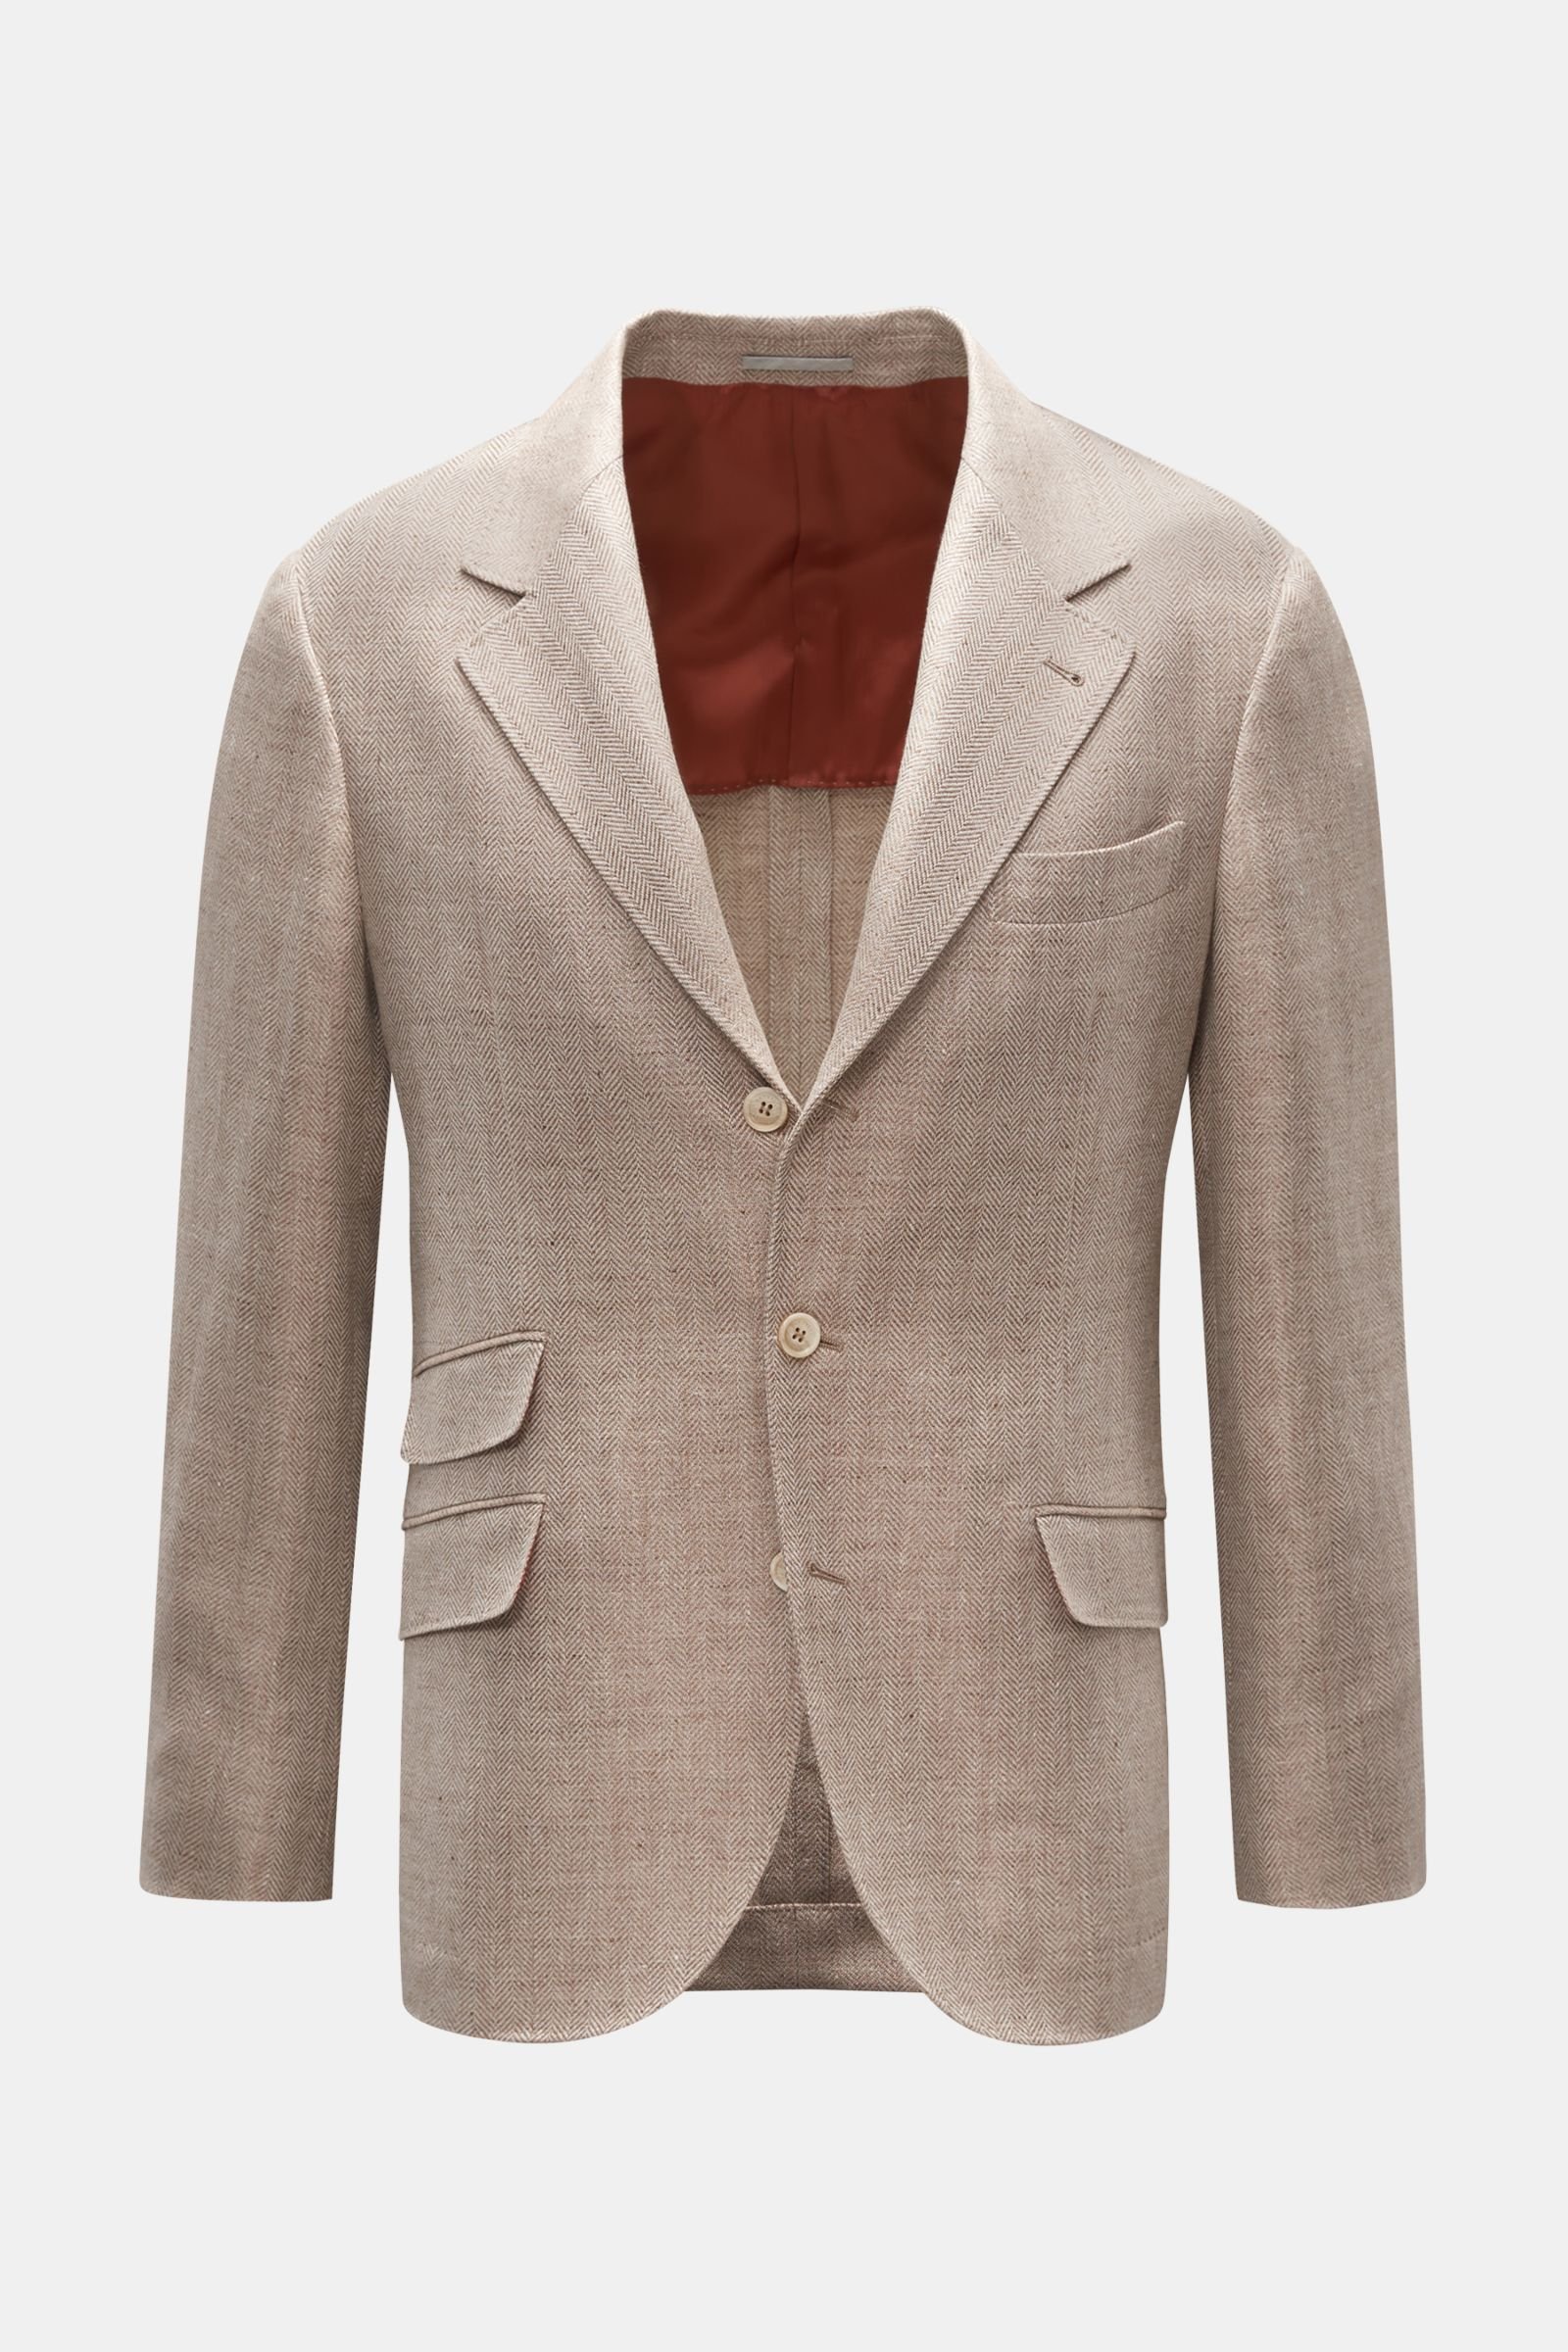 Smart-casual jacket light brown/beige patterned